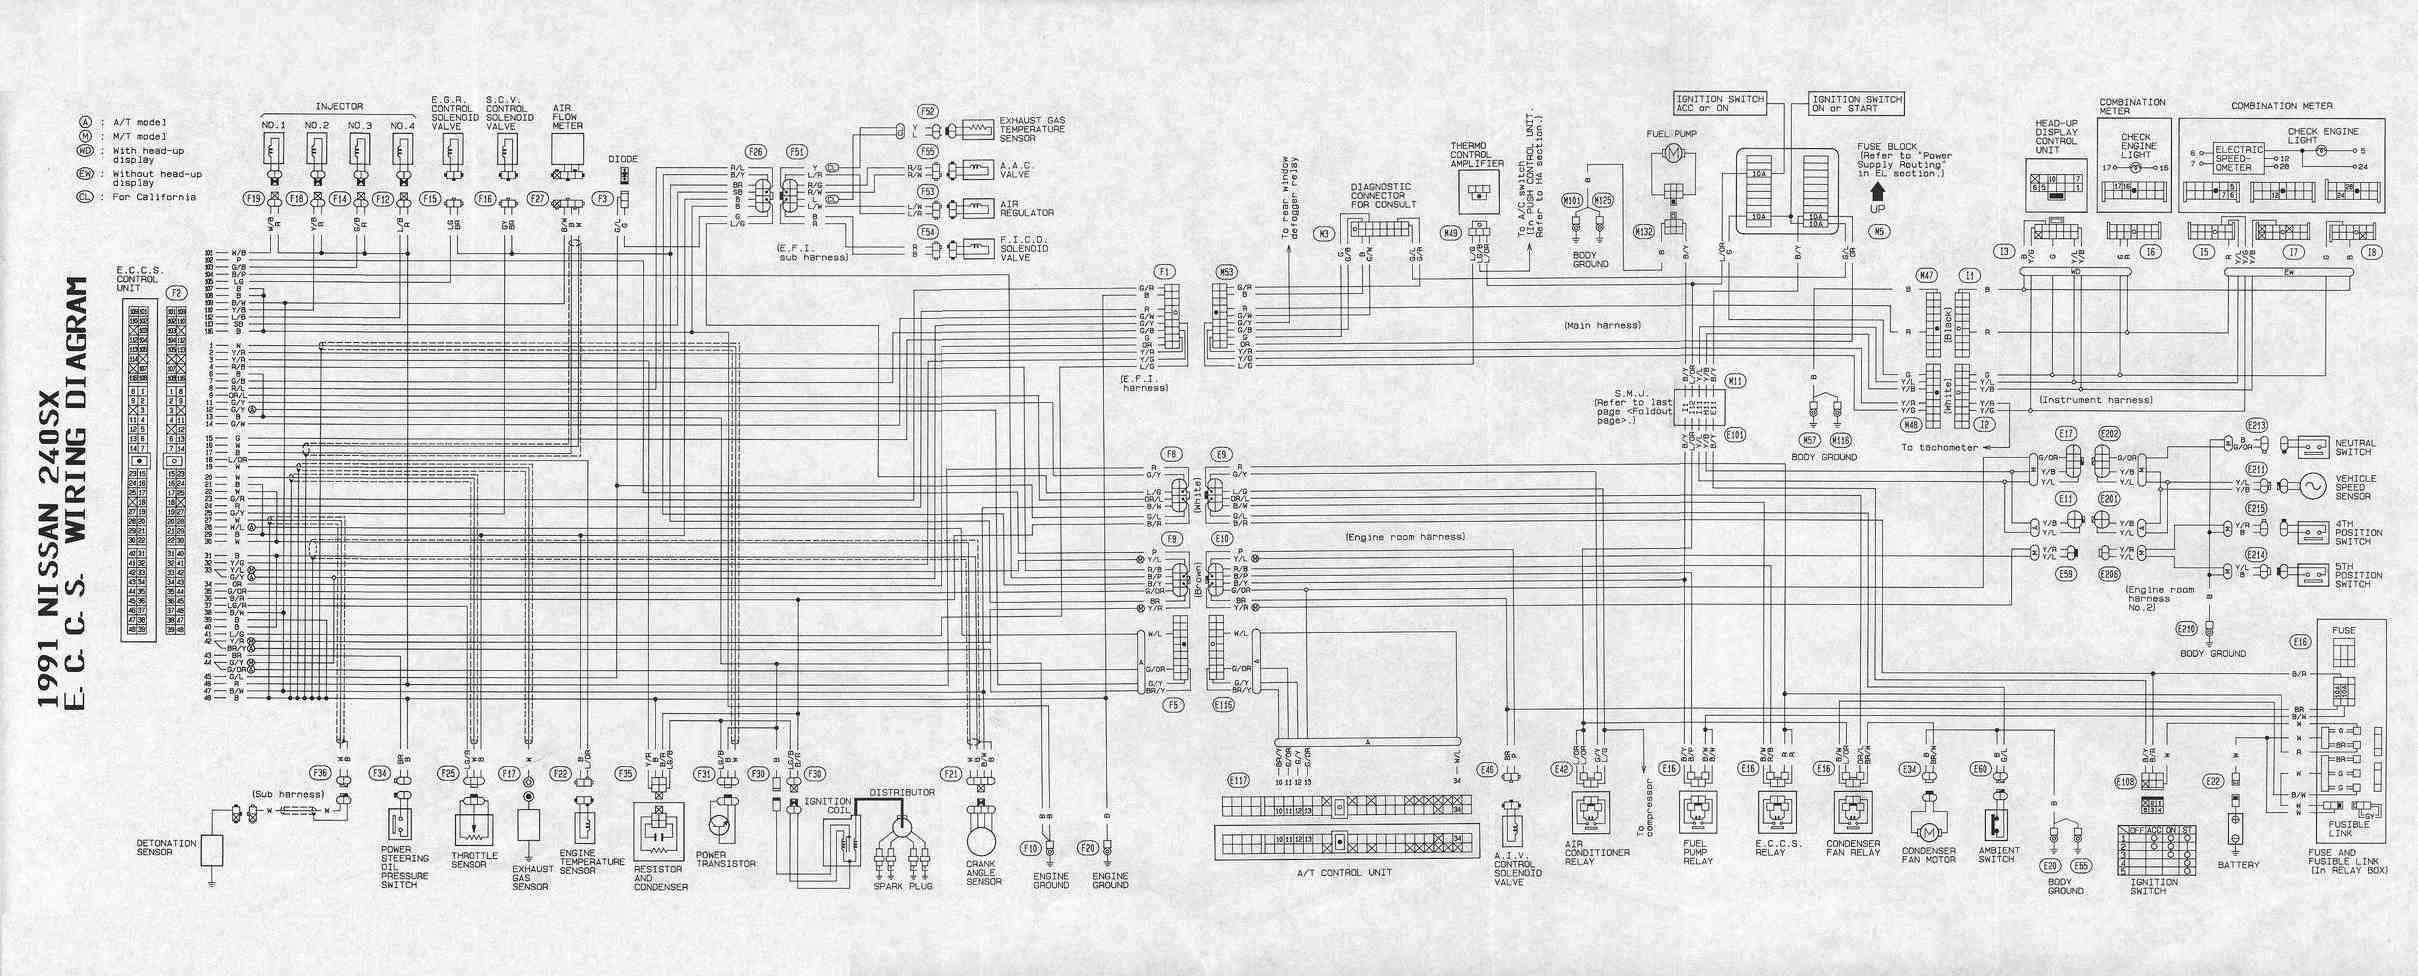 1997 Nissan Pickup Wiring Diagram from www.automotive-manuals.net